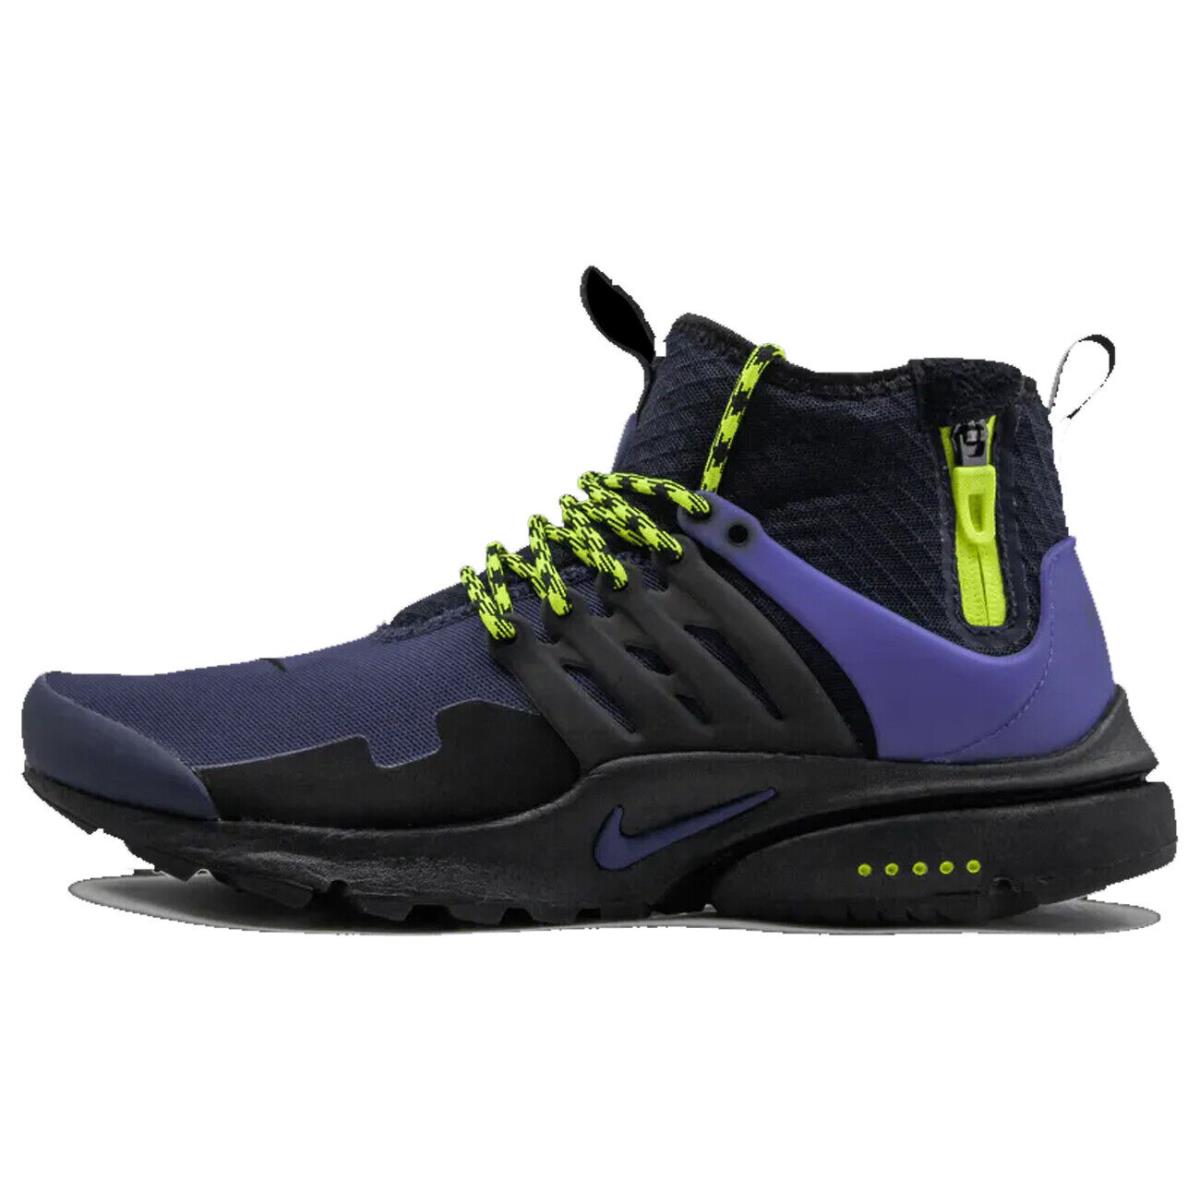 Nike Air Presto 859524 402 Utility Navy Volt Men`s Casual Fashion Sneakers - Navy